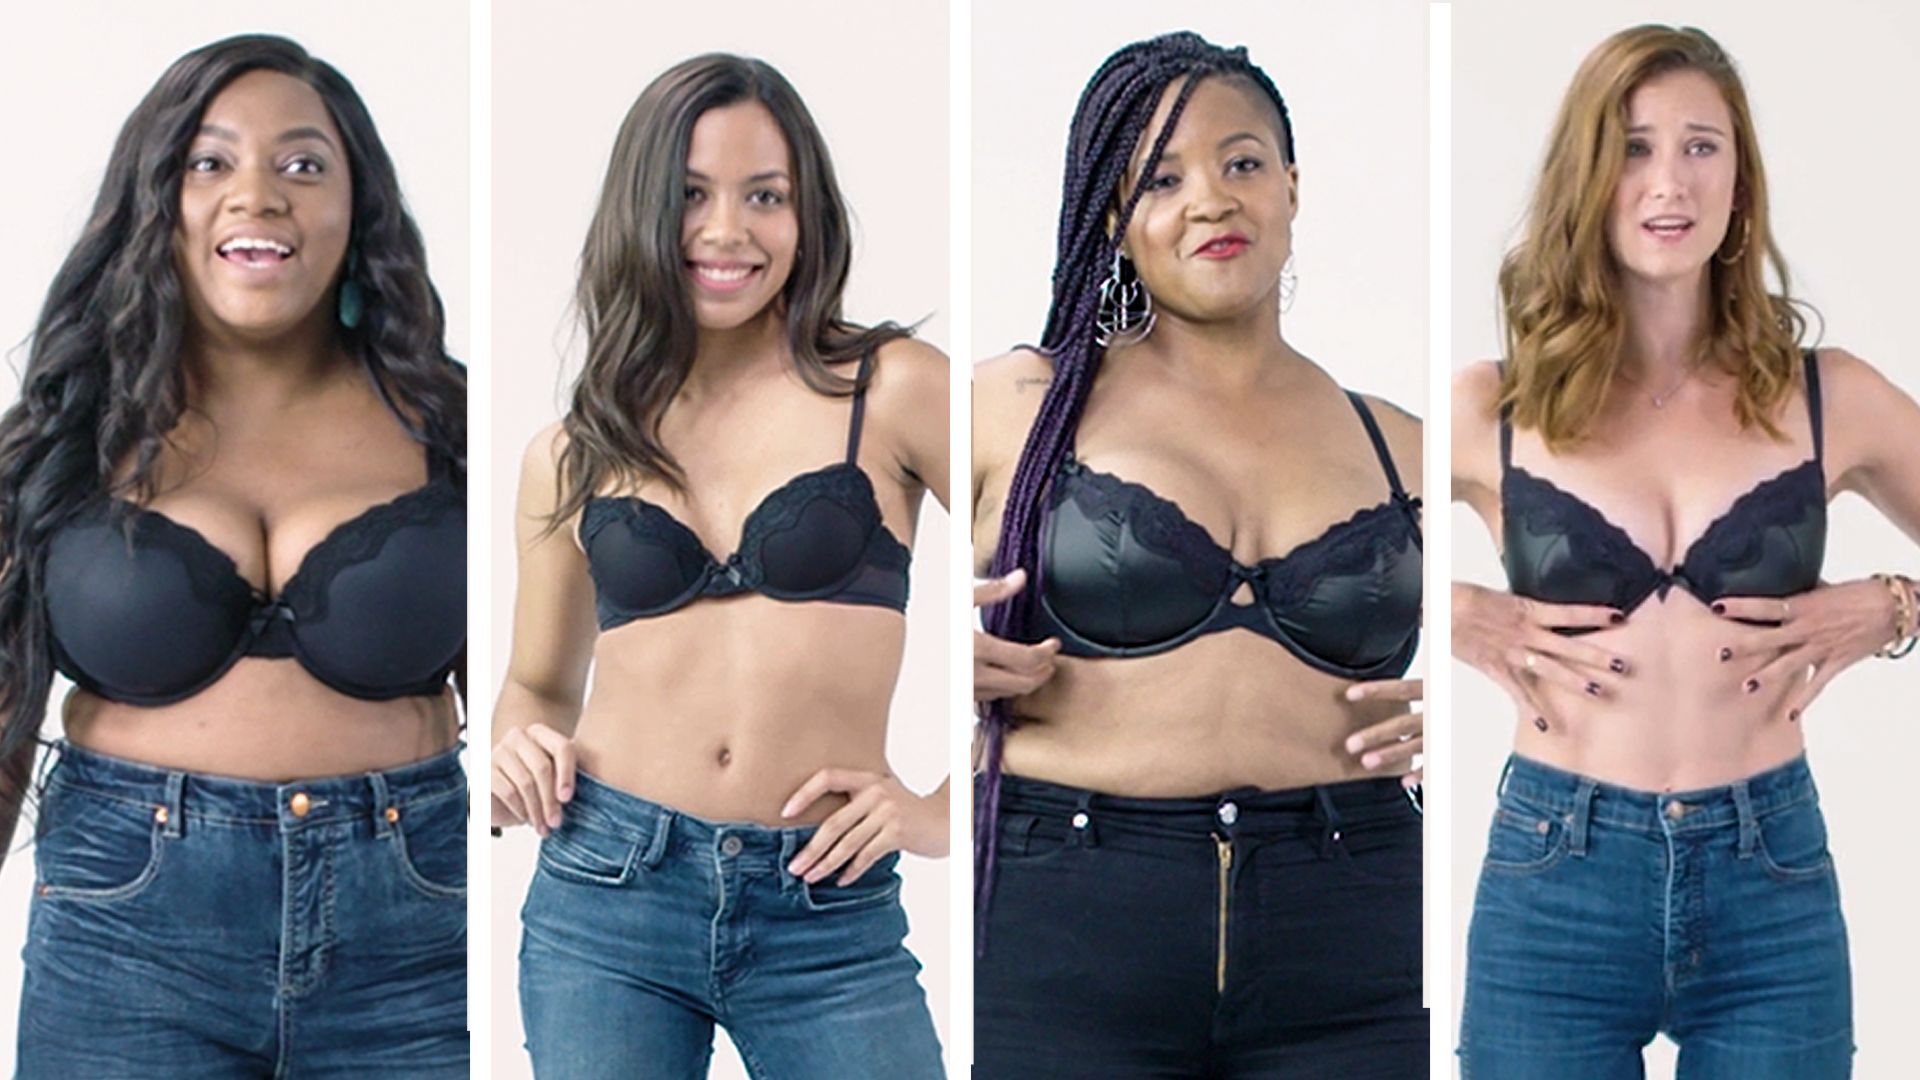 Small Boobs Xxx - Watch Women Sizes 32A Through 42D Try On the Same Bra (Fenty) | Glamour